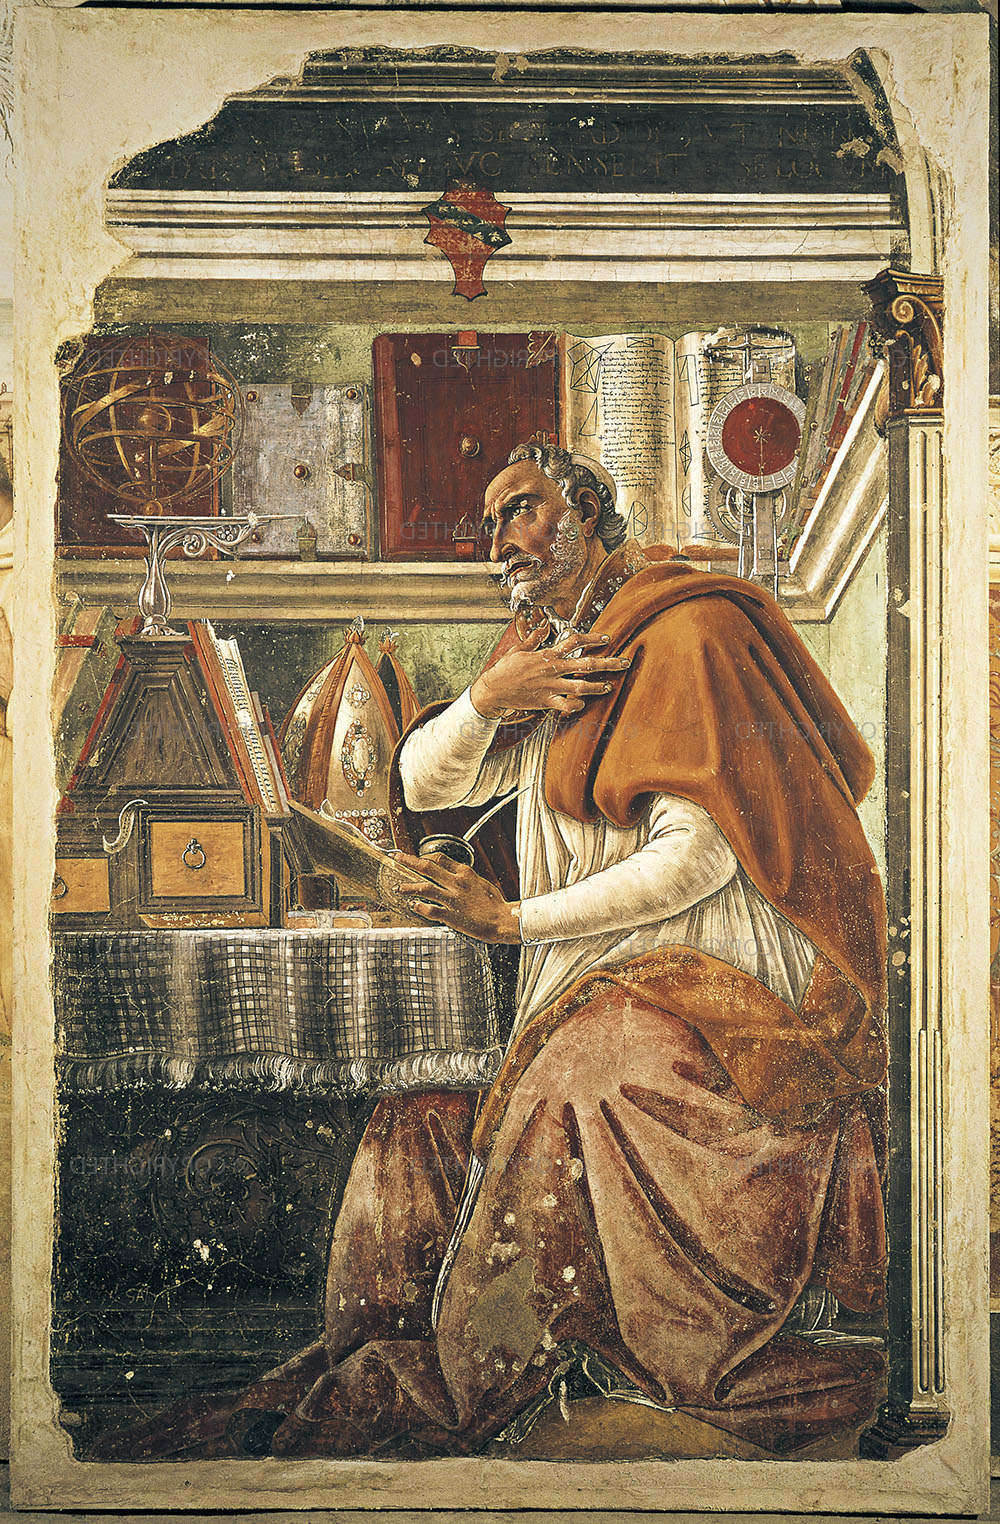 Sandro Botticelli, St. Augustine in his studio